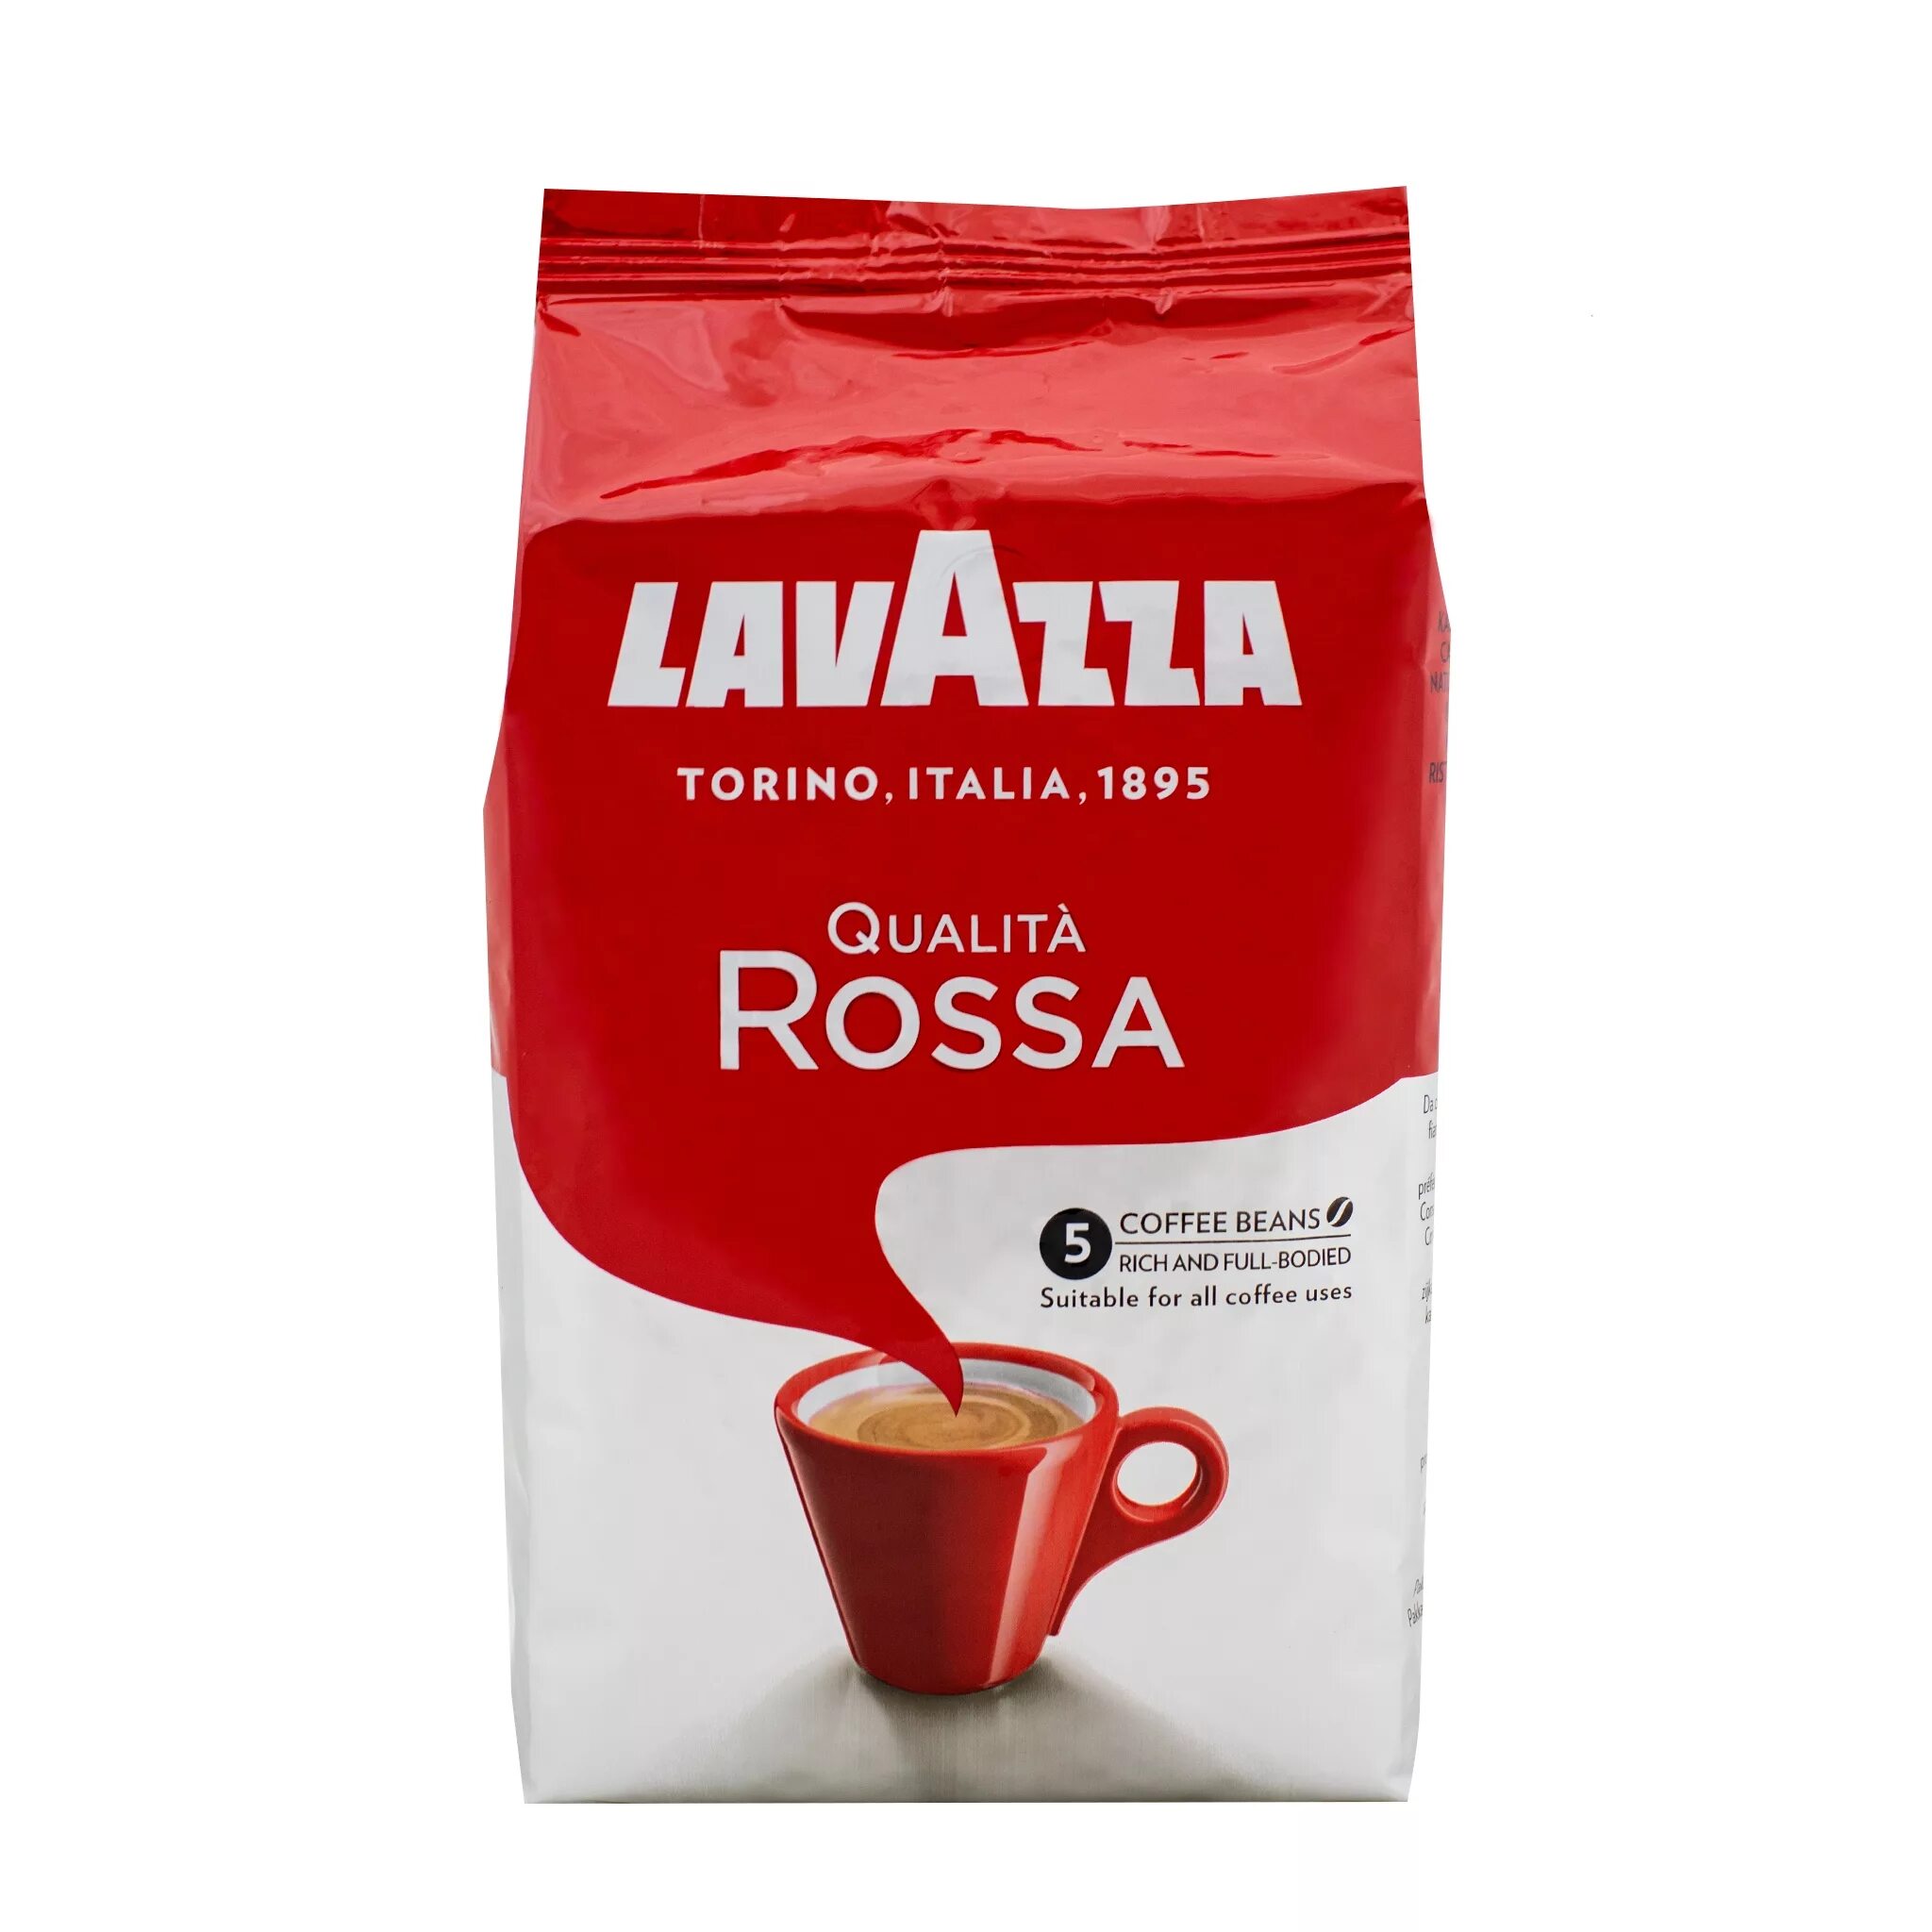 Lavazza 1кг. Кофе Лавацца Росса молотый. Лавацца Росса в зернах 1 кг. Кофе в зернах Lavazza qualita Rossa. Кофе в зернах Lavazza qualita Rossa, 1 кг.